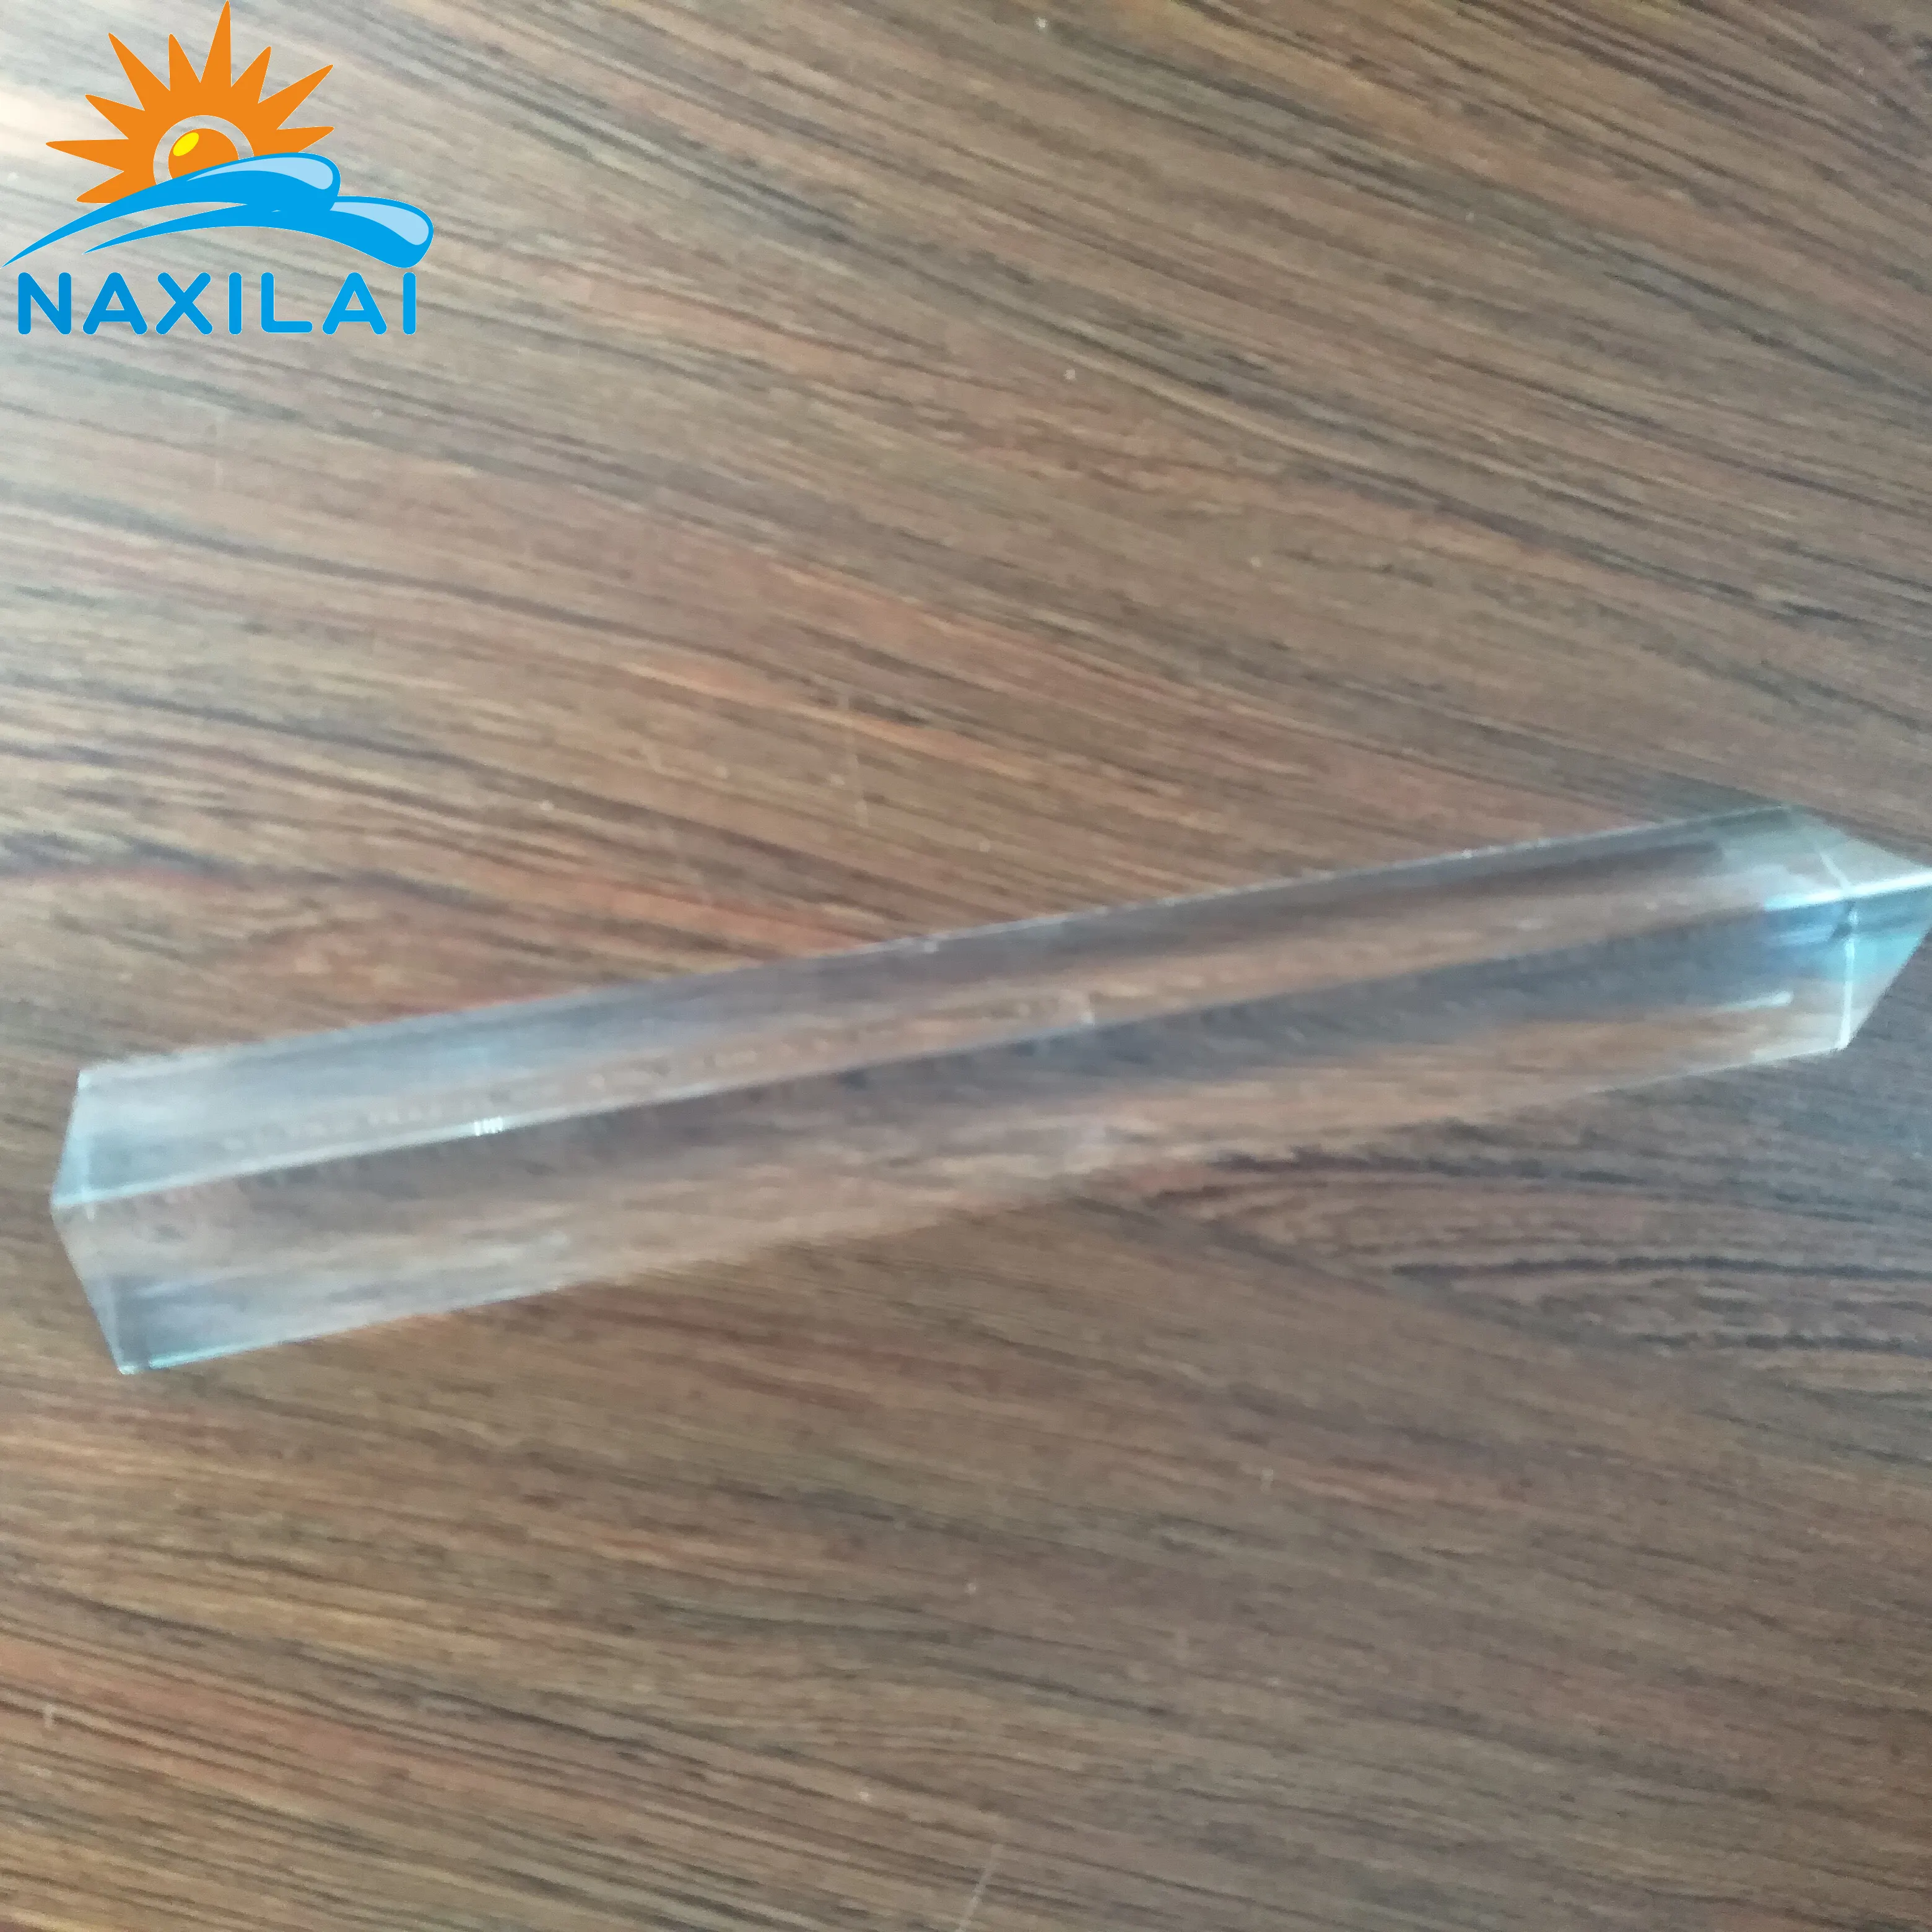 Naxilai fabrik lieferant durchsichtige kunststoff-rute acryl runderute transparente durchsichtige dreieck-acryl-rute